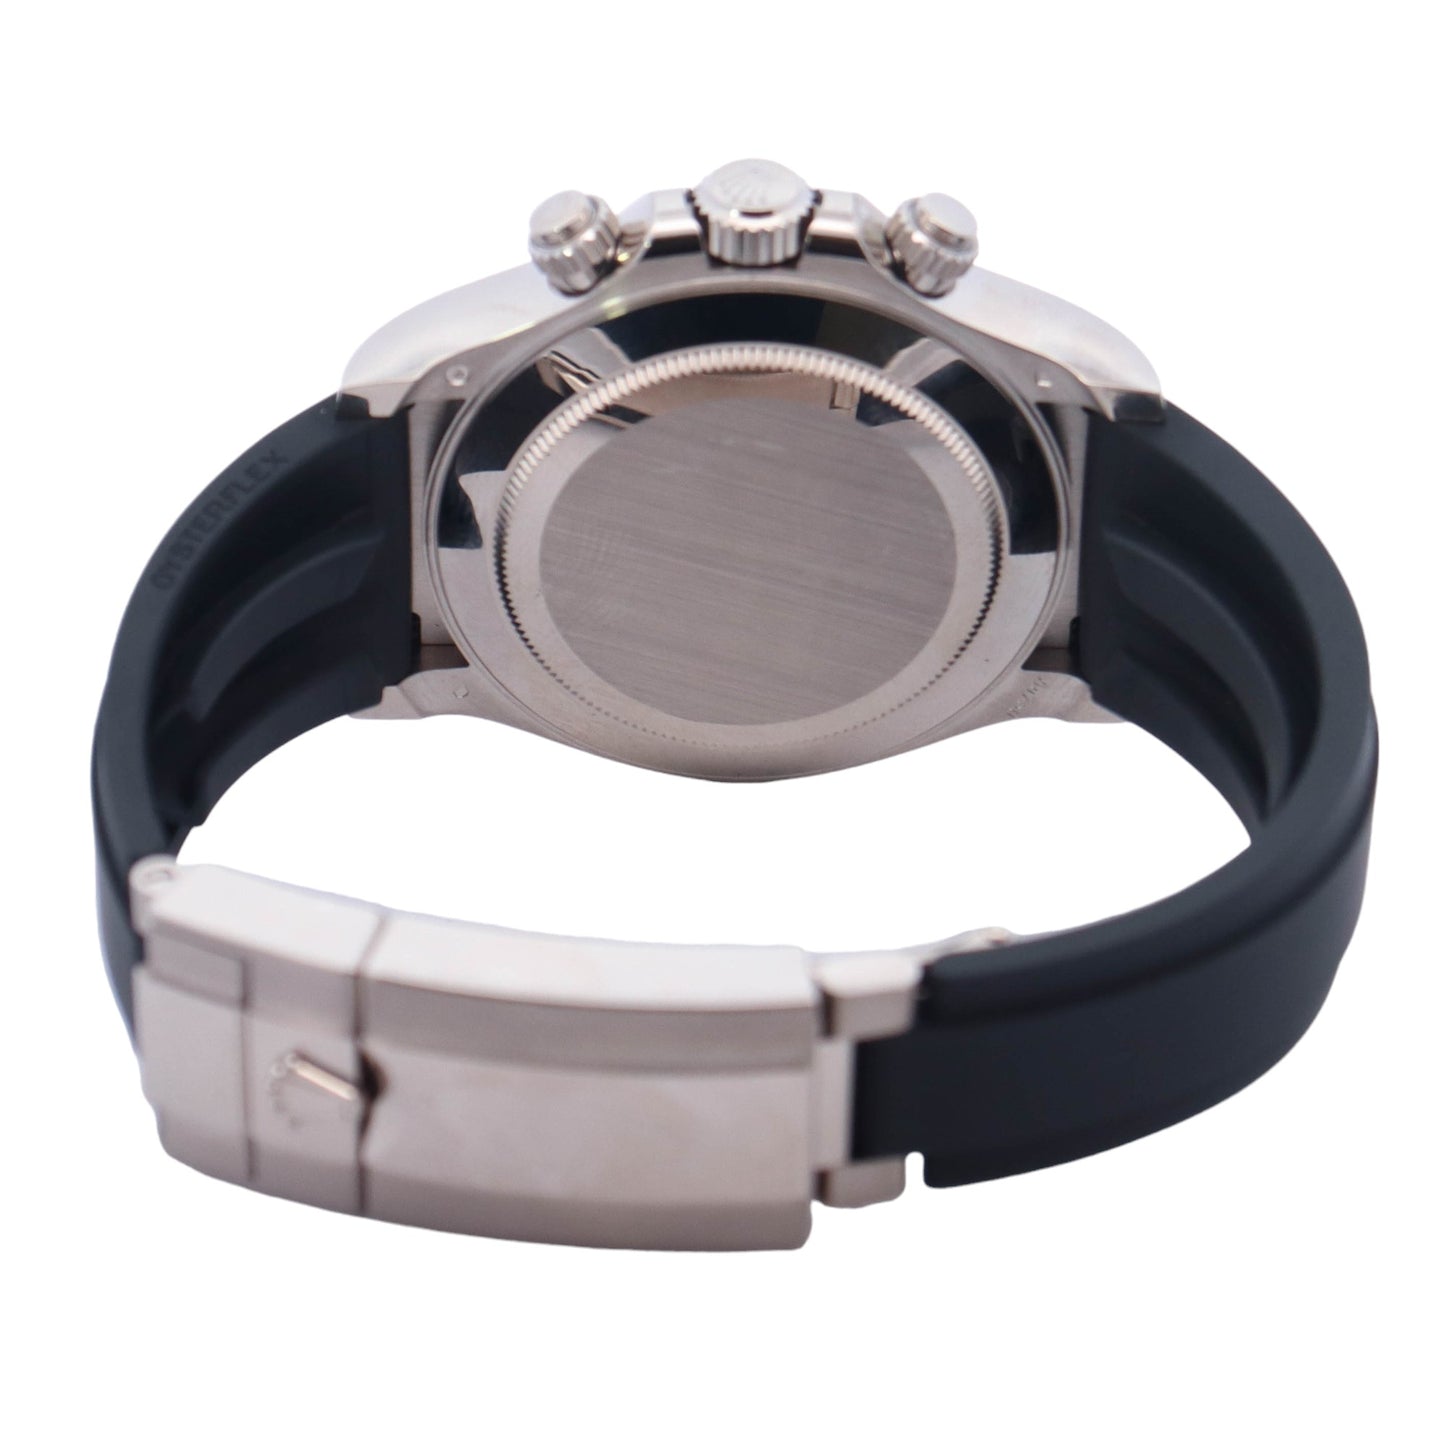 Rolex Daytona White Gold 40mm Metiorite Chronograph Dial Watch Reference# 116519LN - Happy Jewelers Fine Jewelry Lifetime Warranty